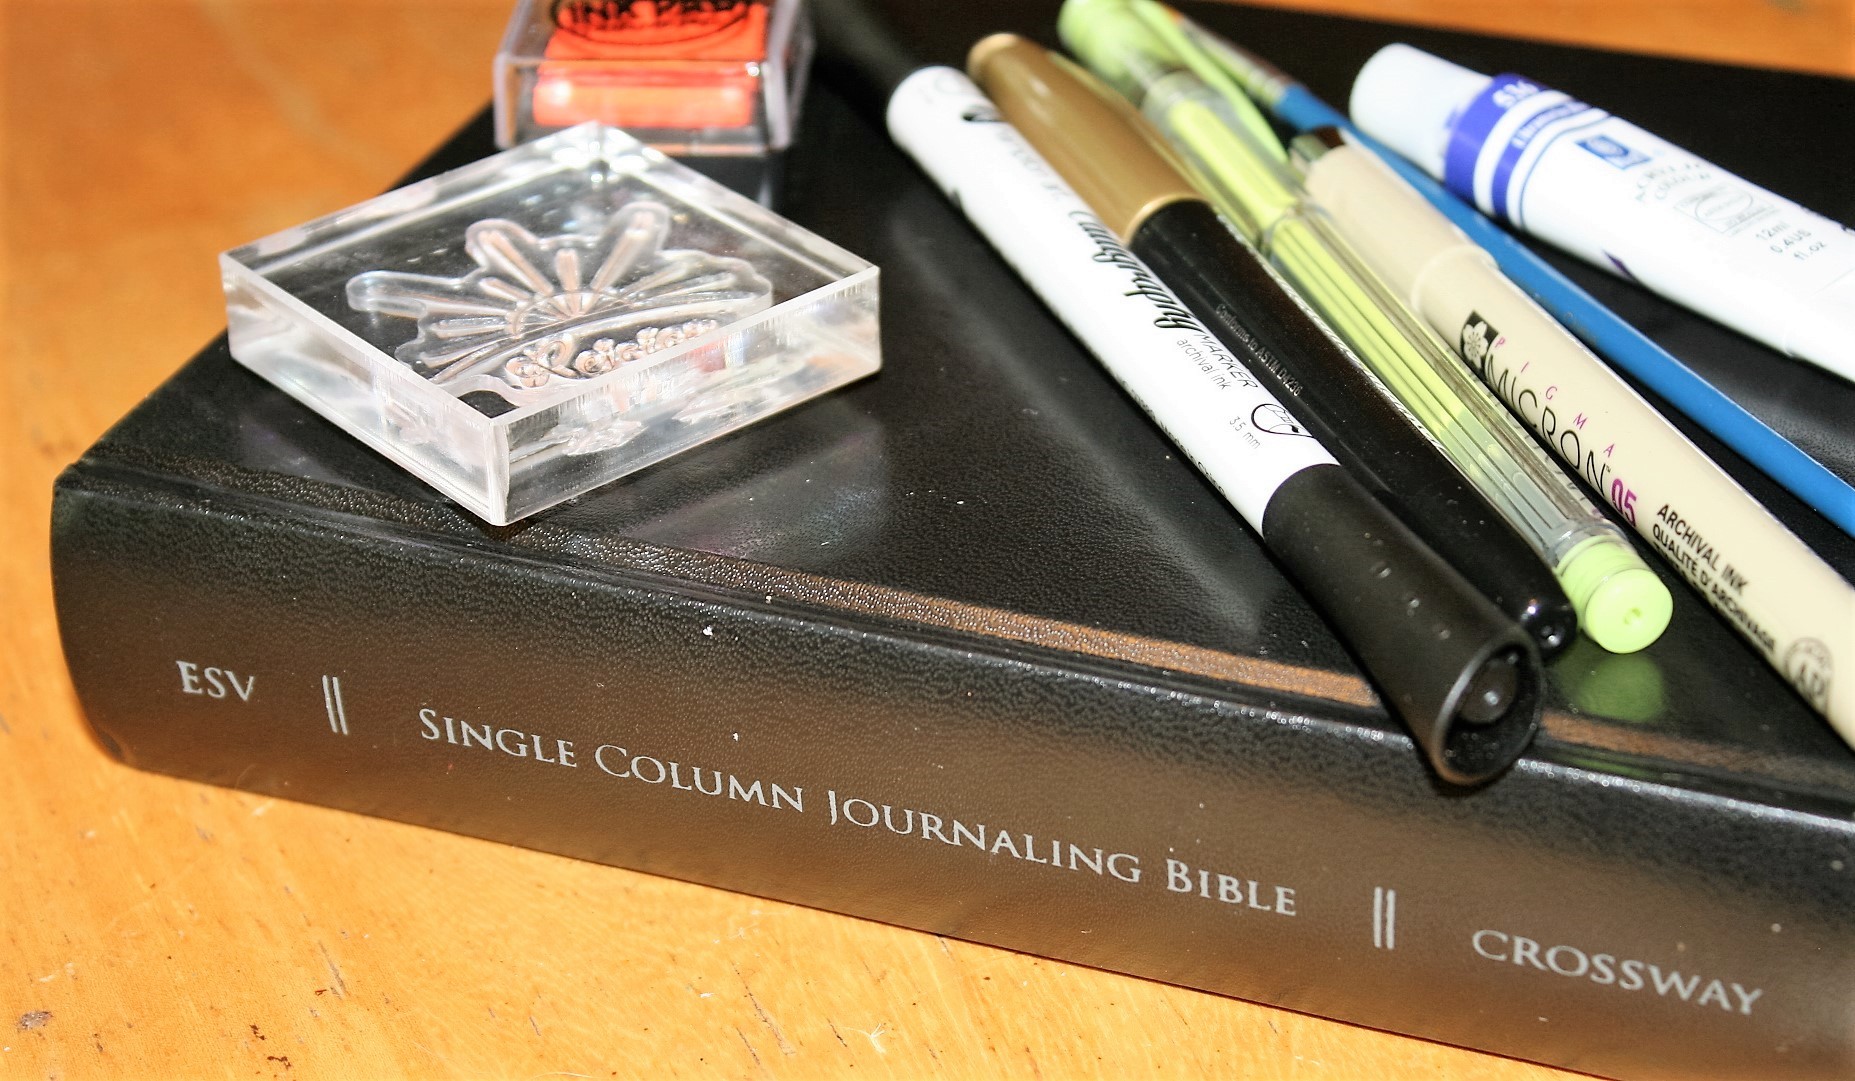 Pigma Micron 01 Fine & 05 Medium Point Bible Study Pen Kit